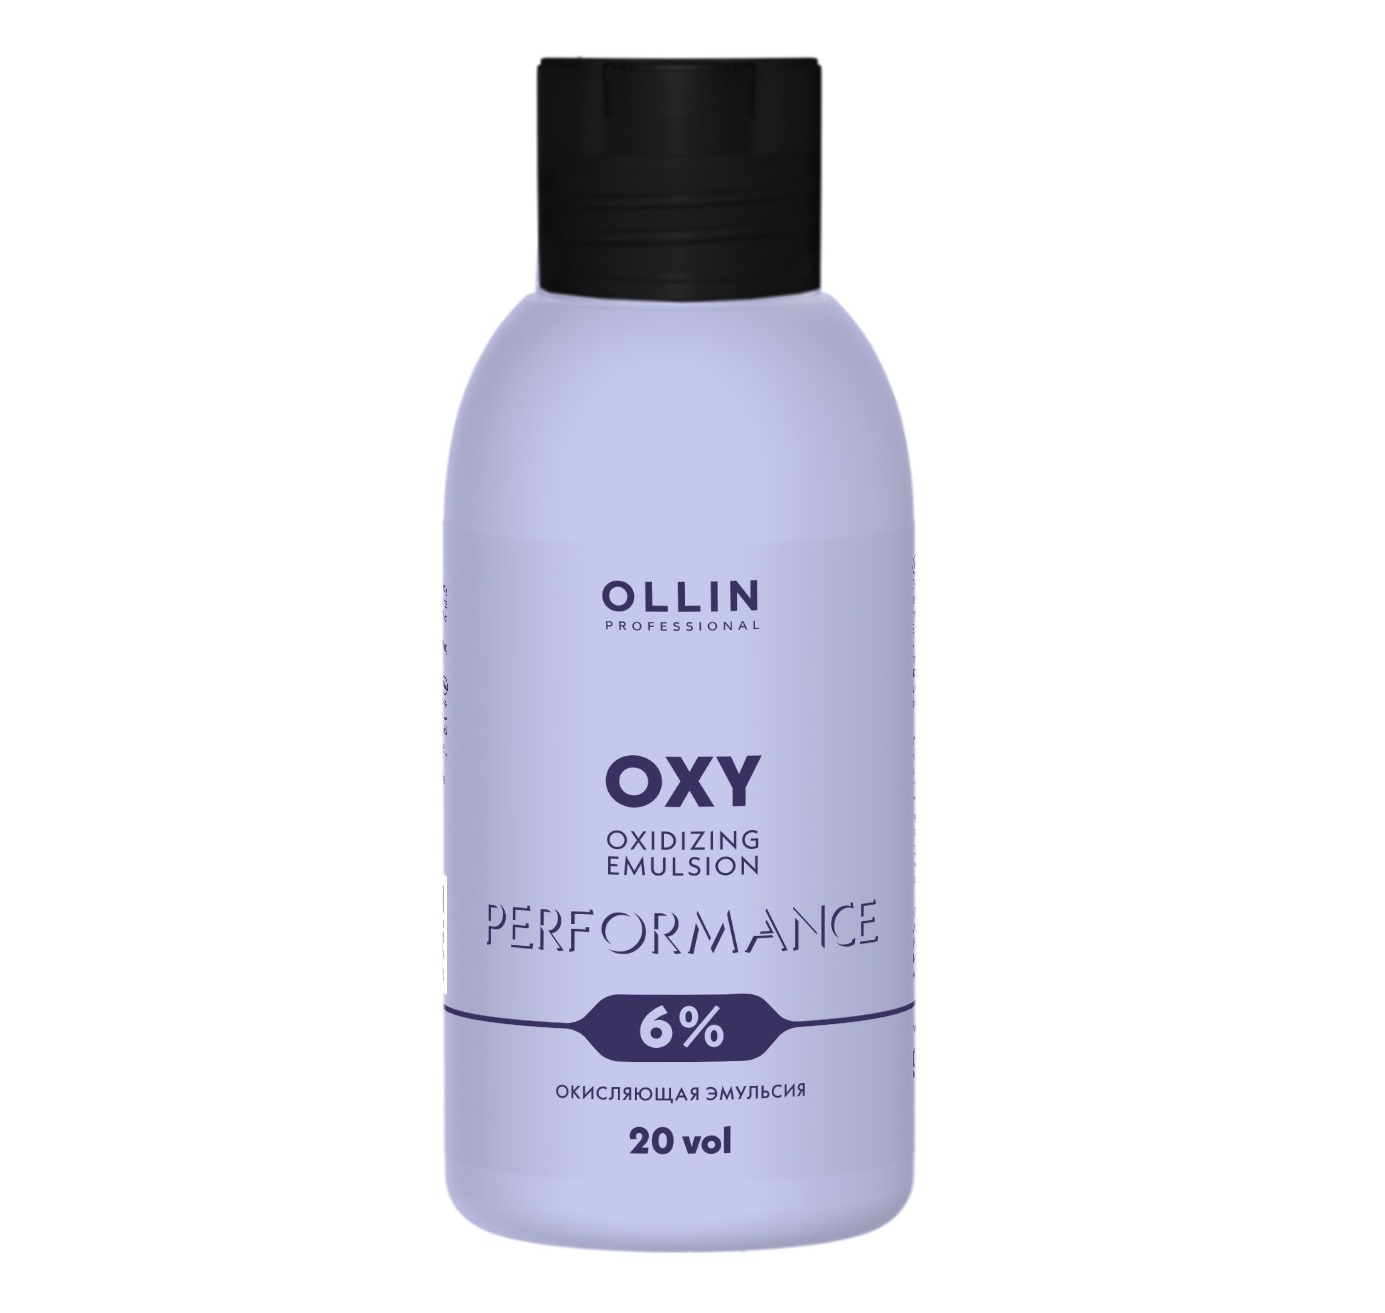 ollin performance oxy мини 3% 10vol окисляющая эмульсия 90 мл Ollin Professional Окисляющая эмульсия 6% 20 vol, 90 мл (Ollin Professional, Performance)